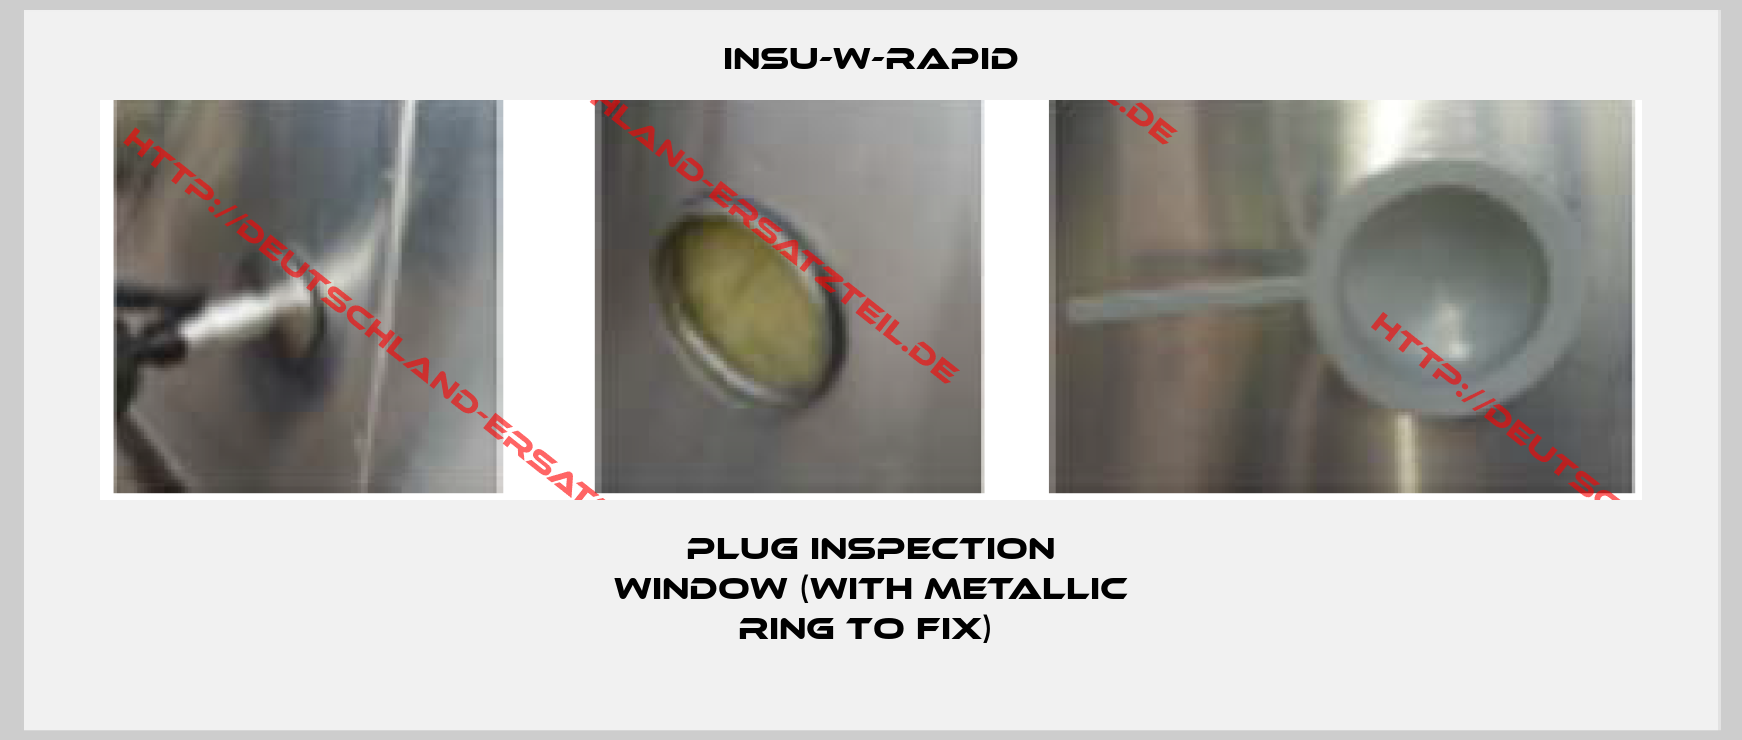 INSU-W-RAPID-Plug Inspection Window (with metallic ring to fix) 